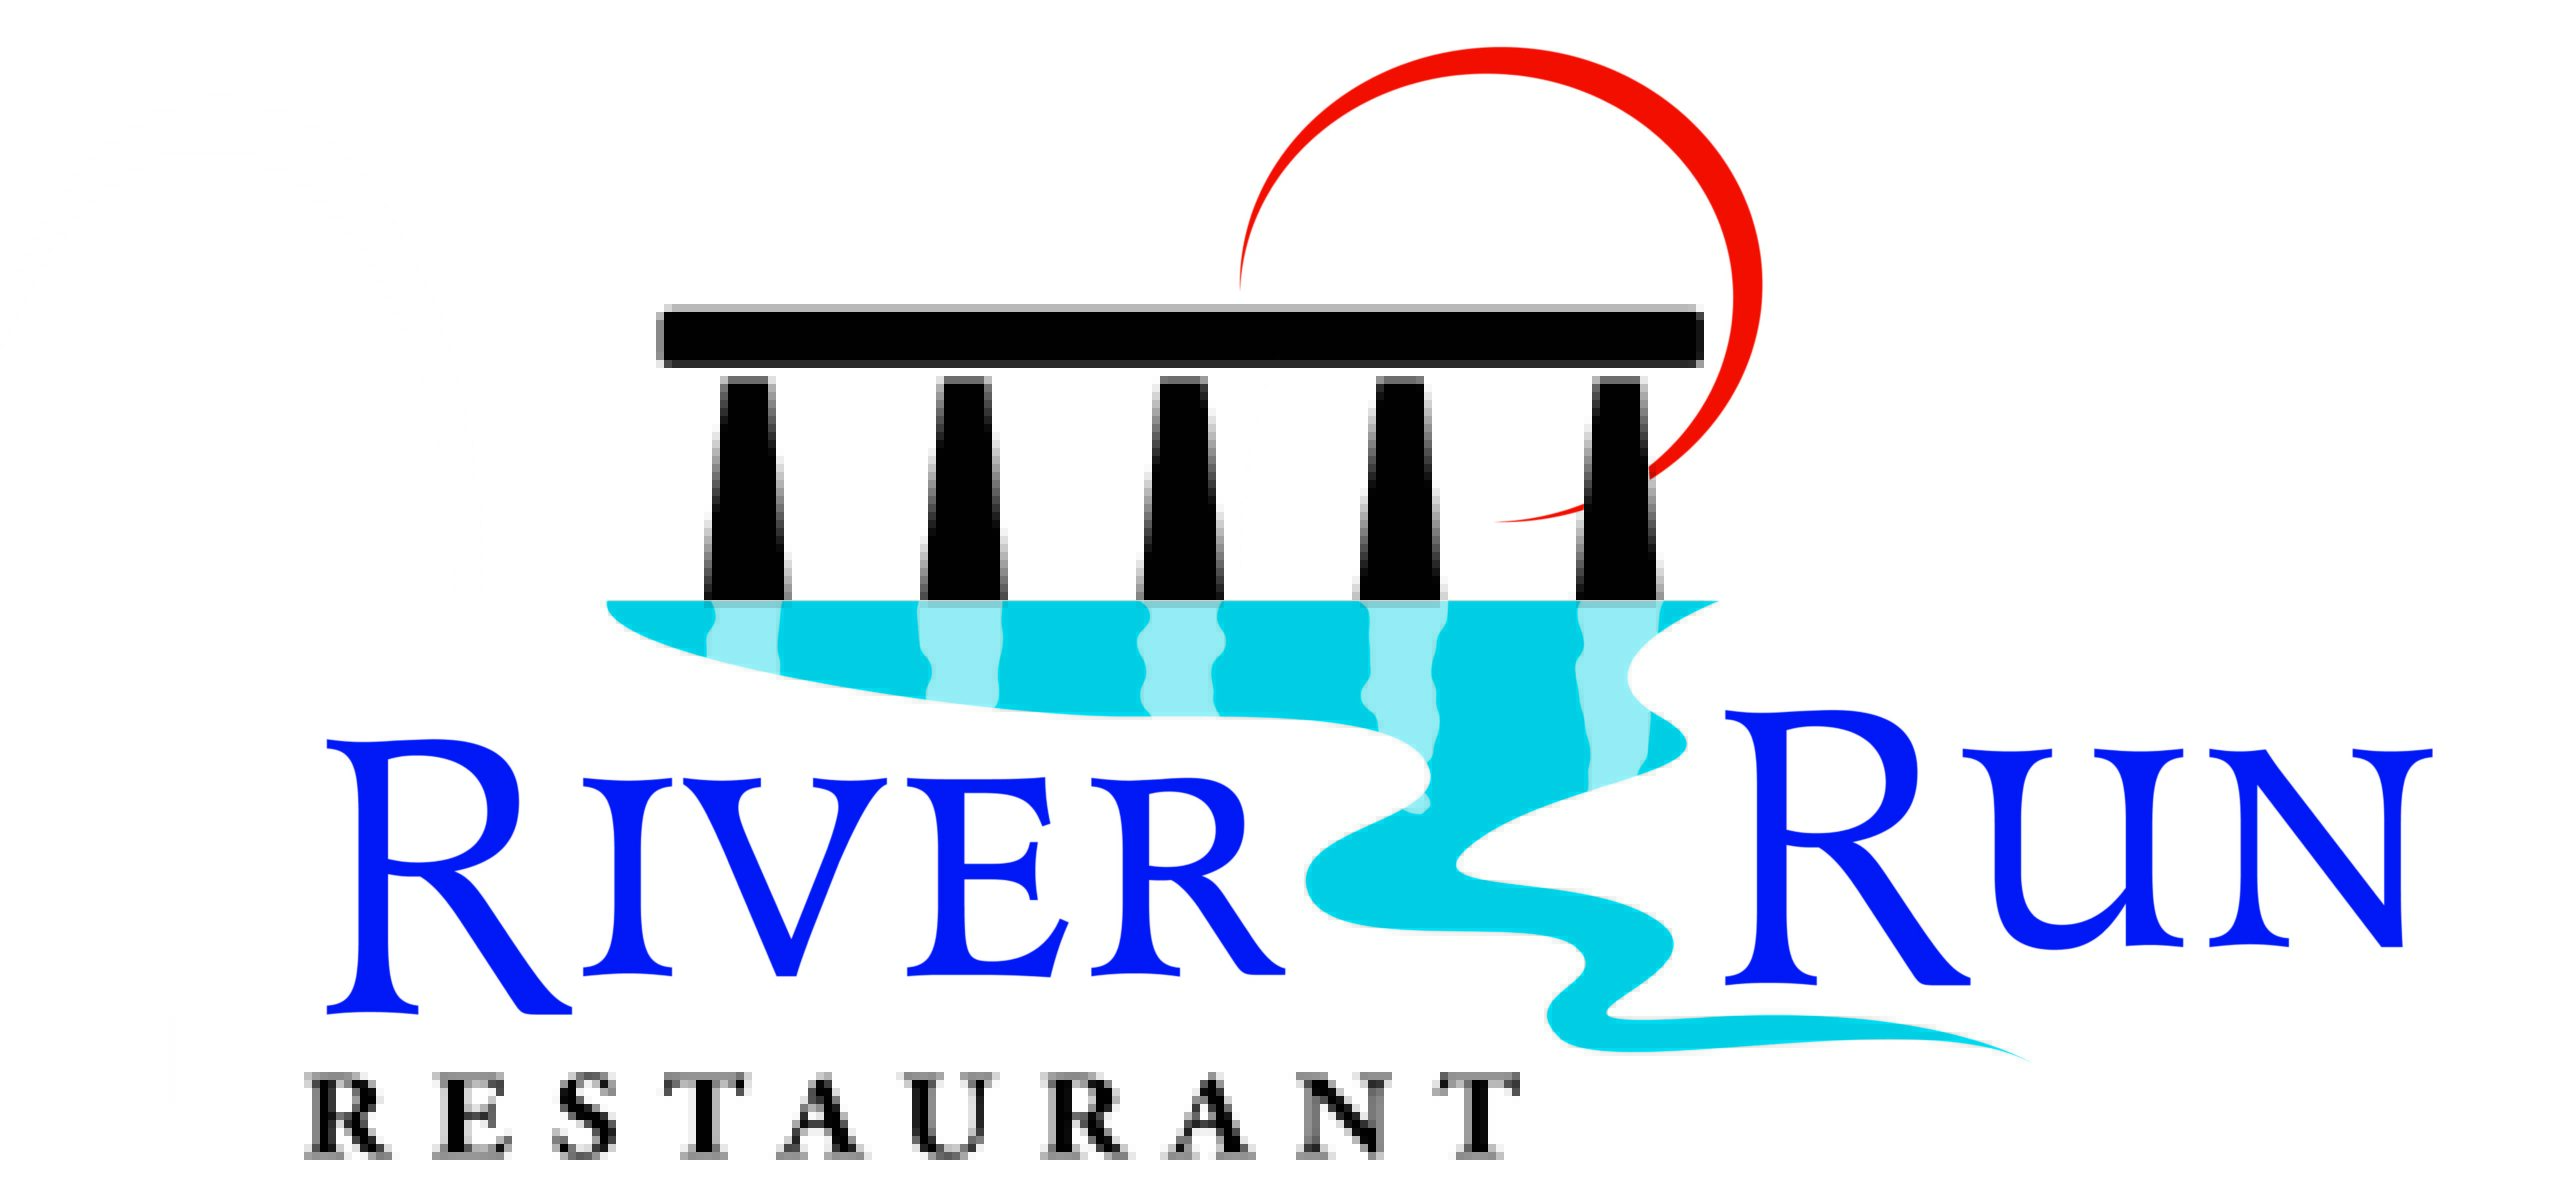 River Run Restaurant Logo (002)